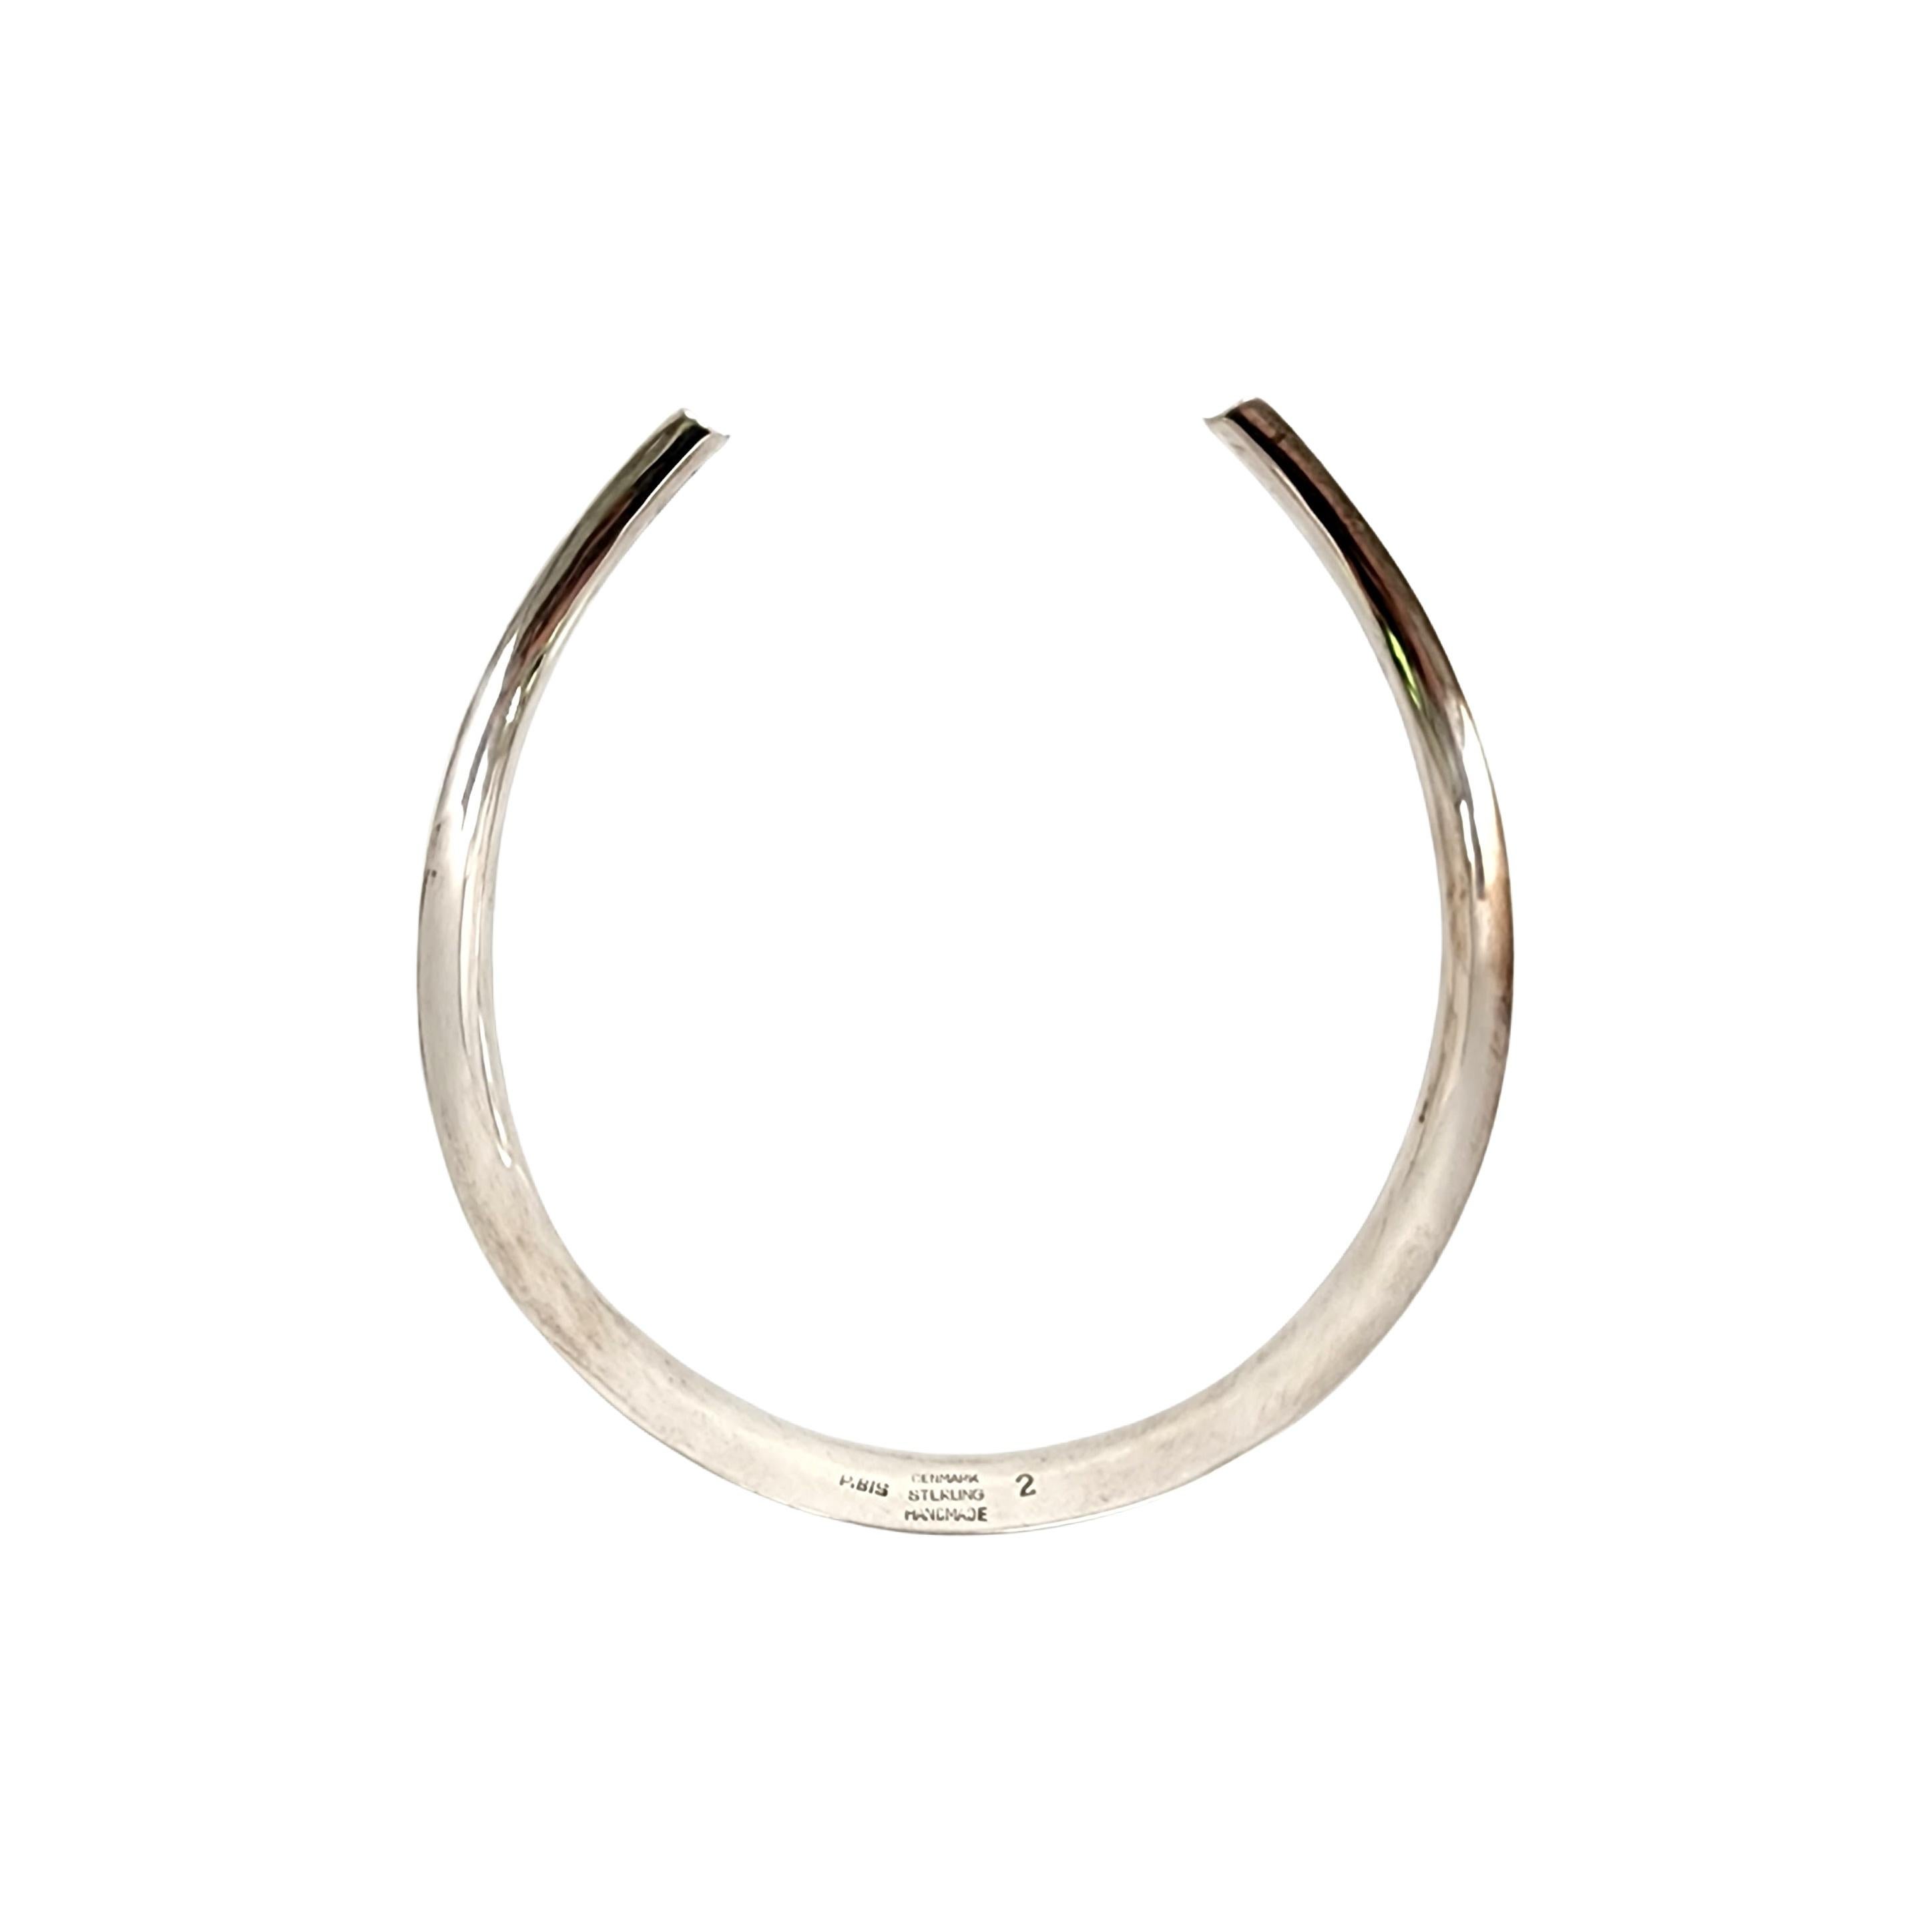 Palle Bisgaard Denmark Sterling Silver Neck Ring Collar Necklace 2 #14683 For Sale 1